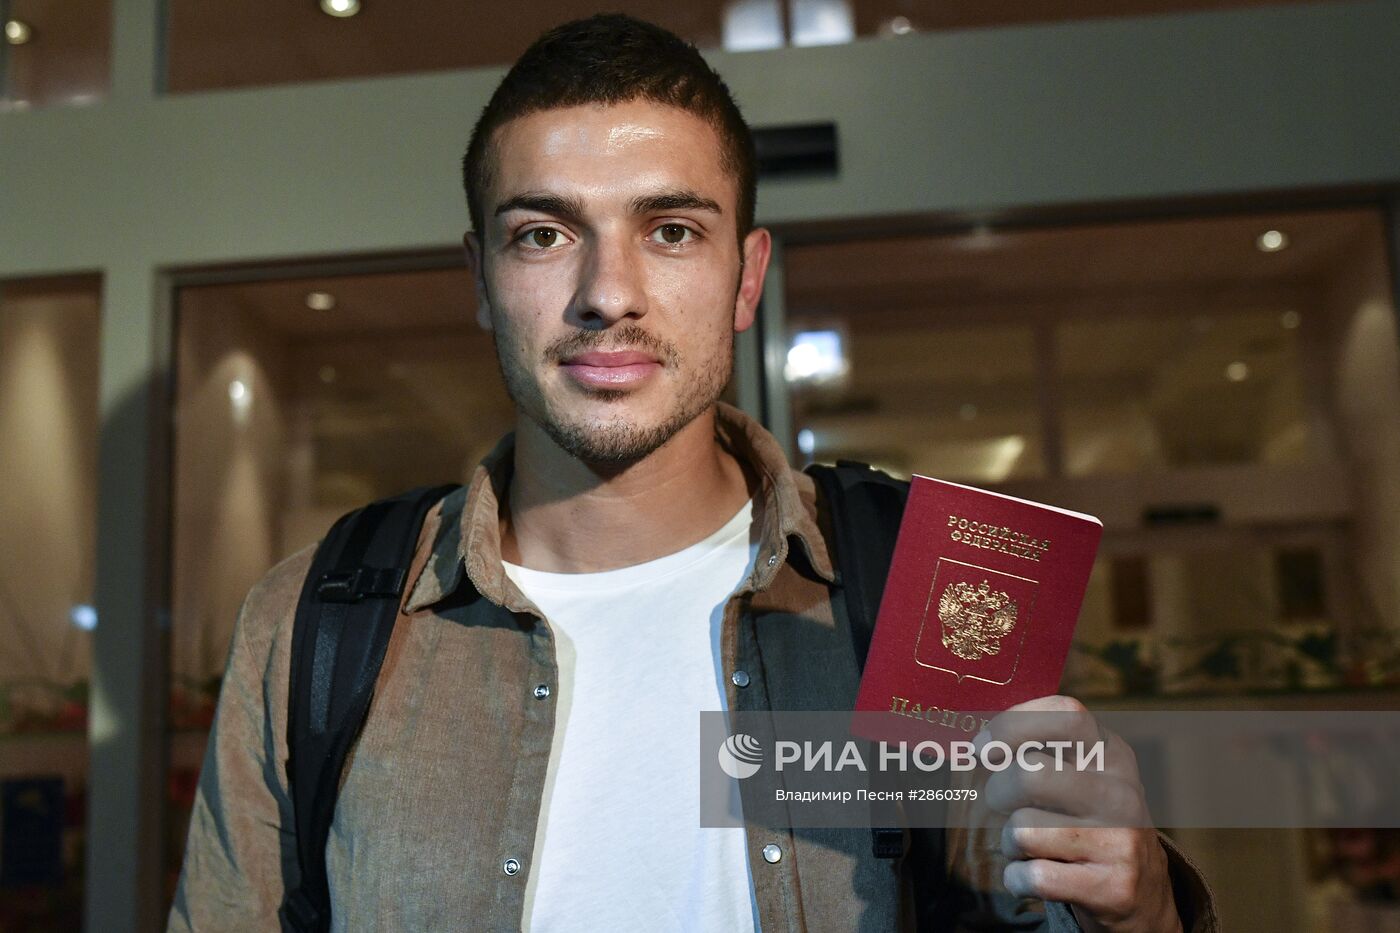 Футболист Роман Нойштедтер получил паспорт России